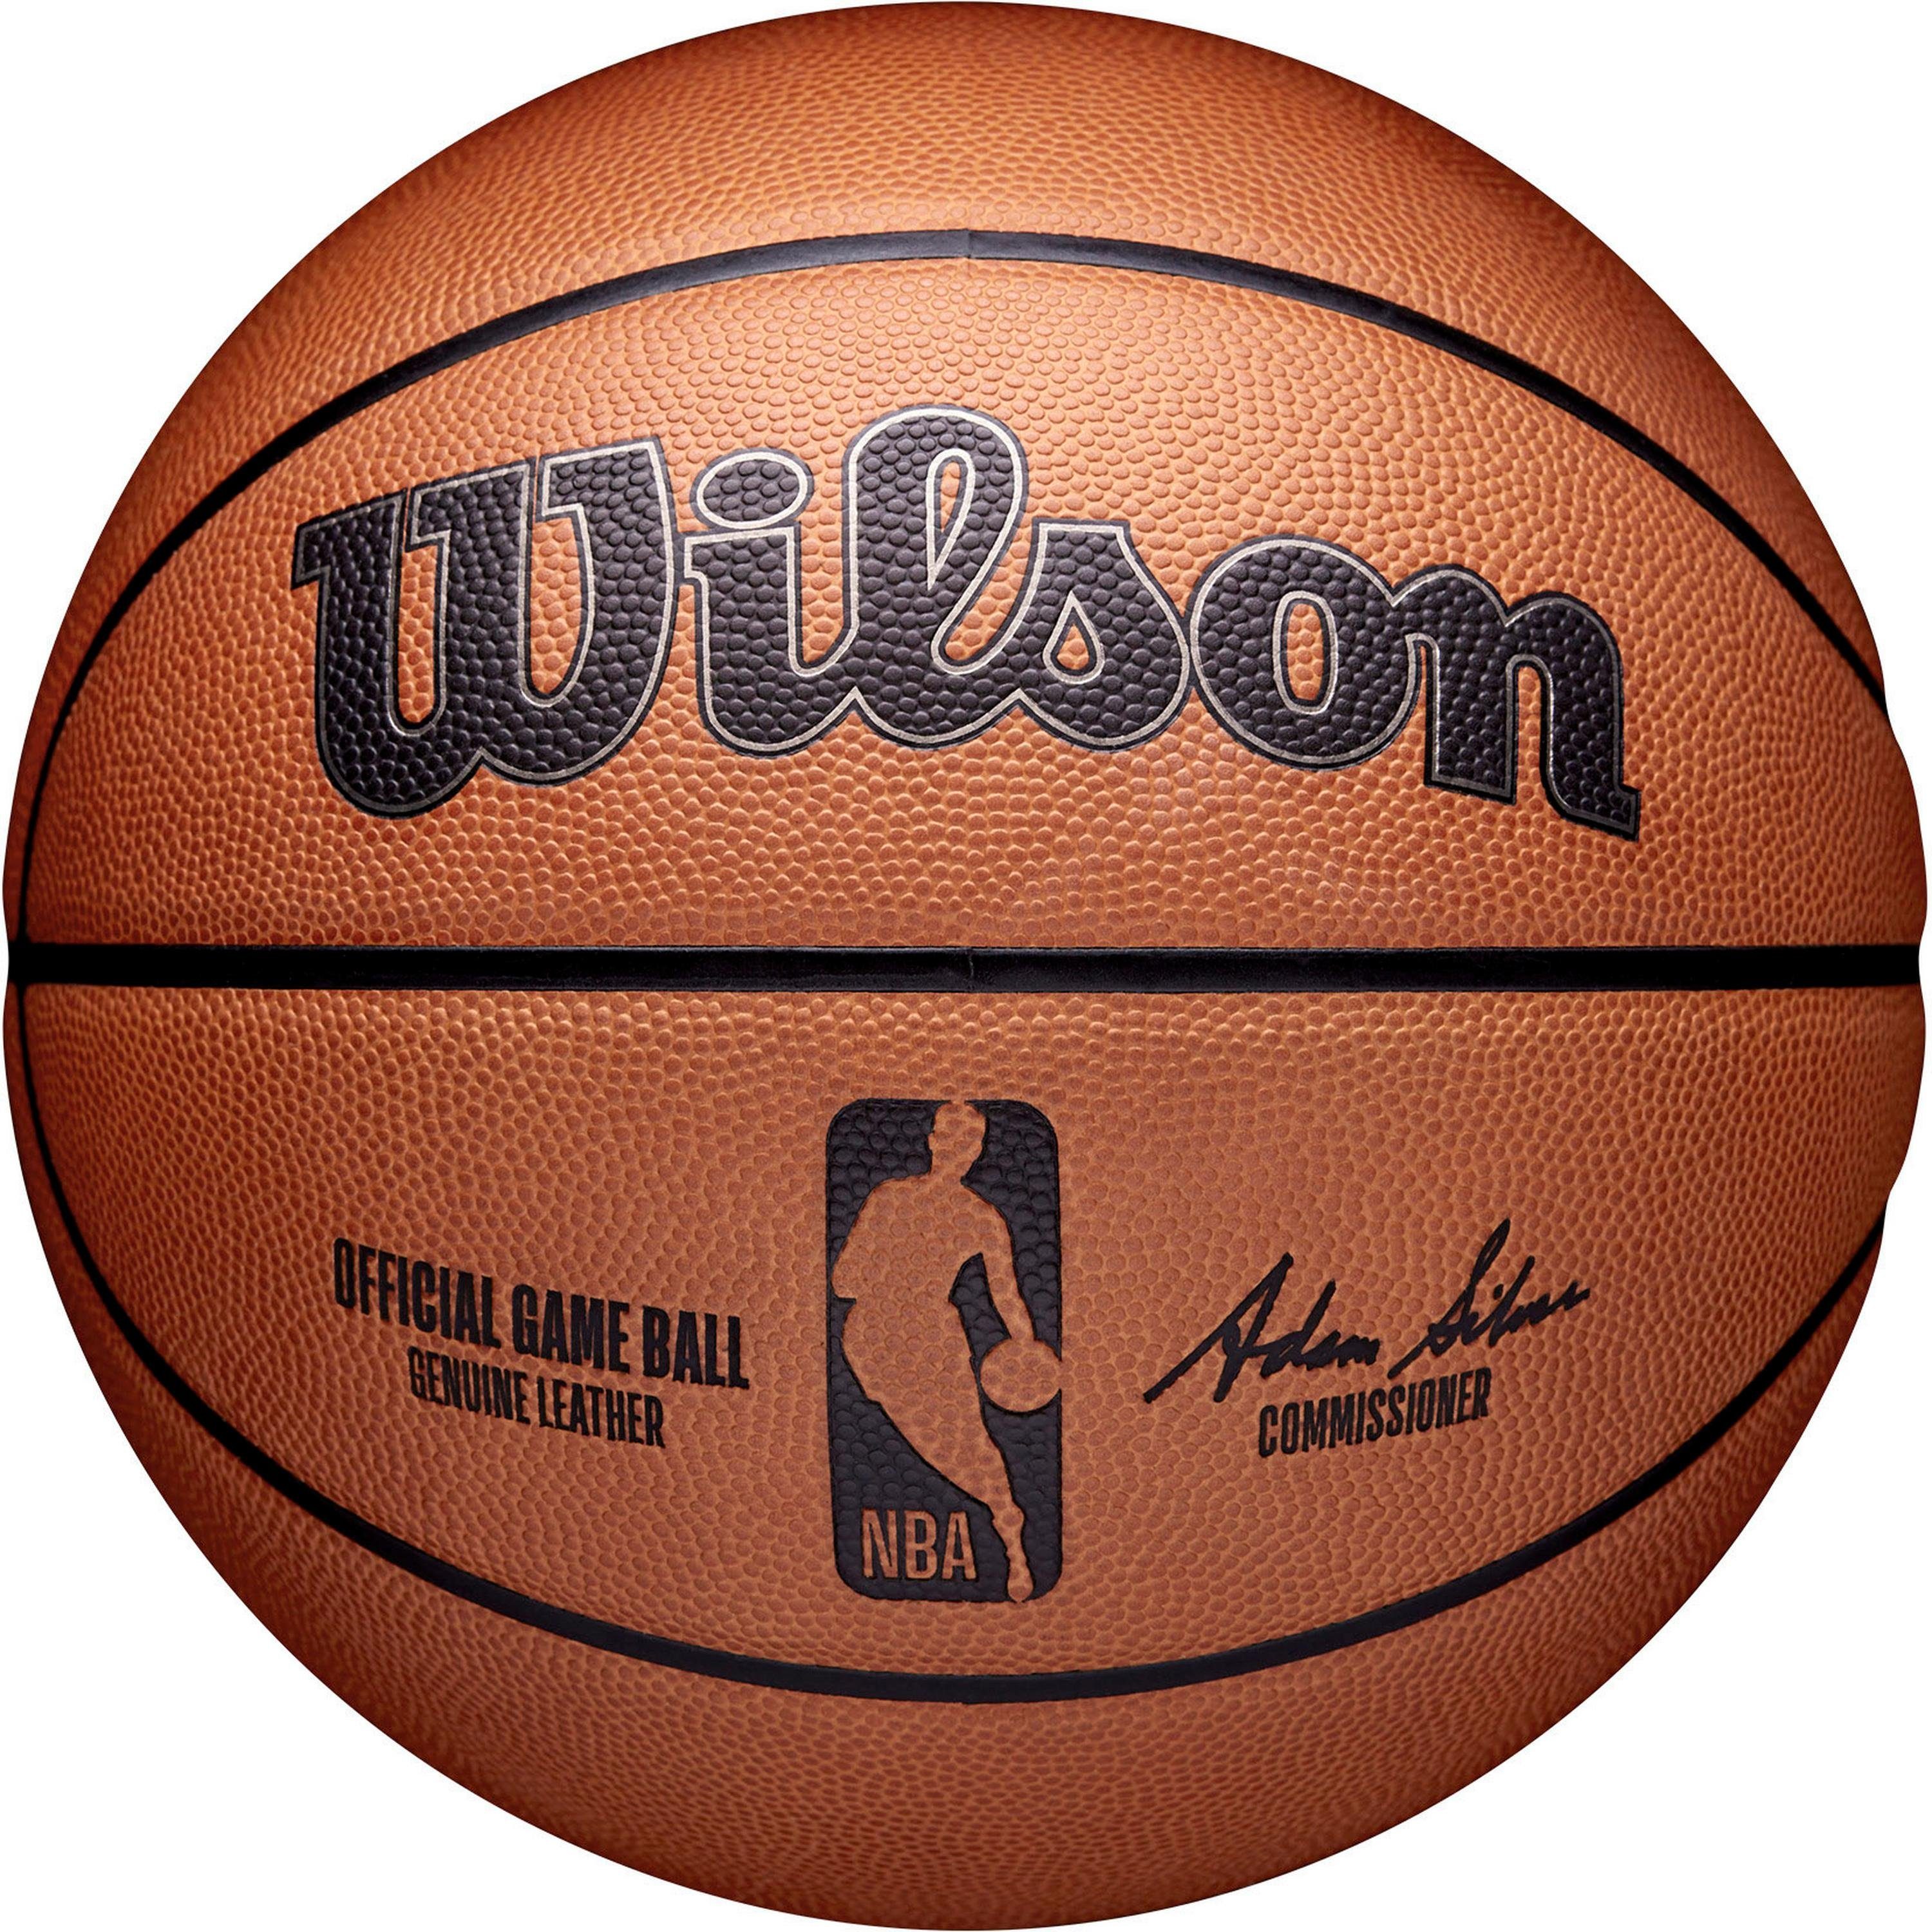 OFFICIAL Basketball GAME BALL NBA Wilson